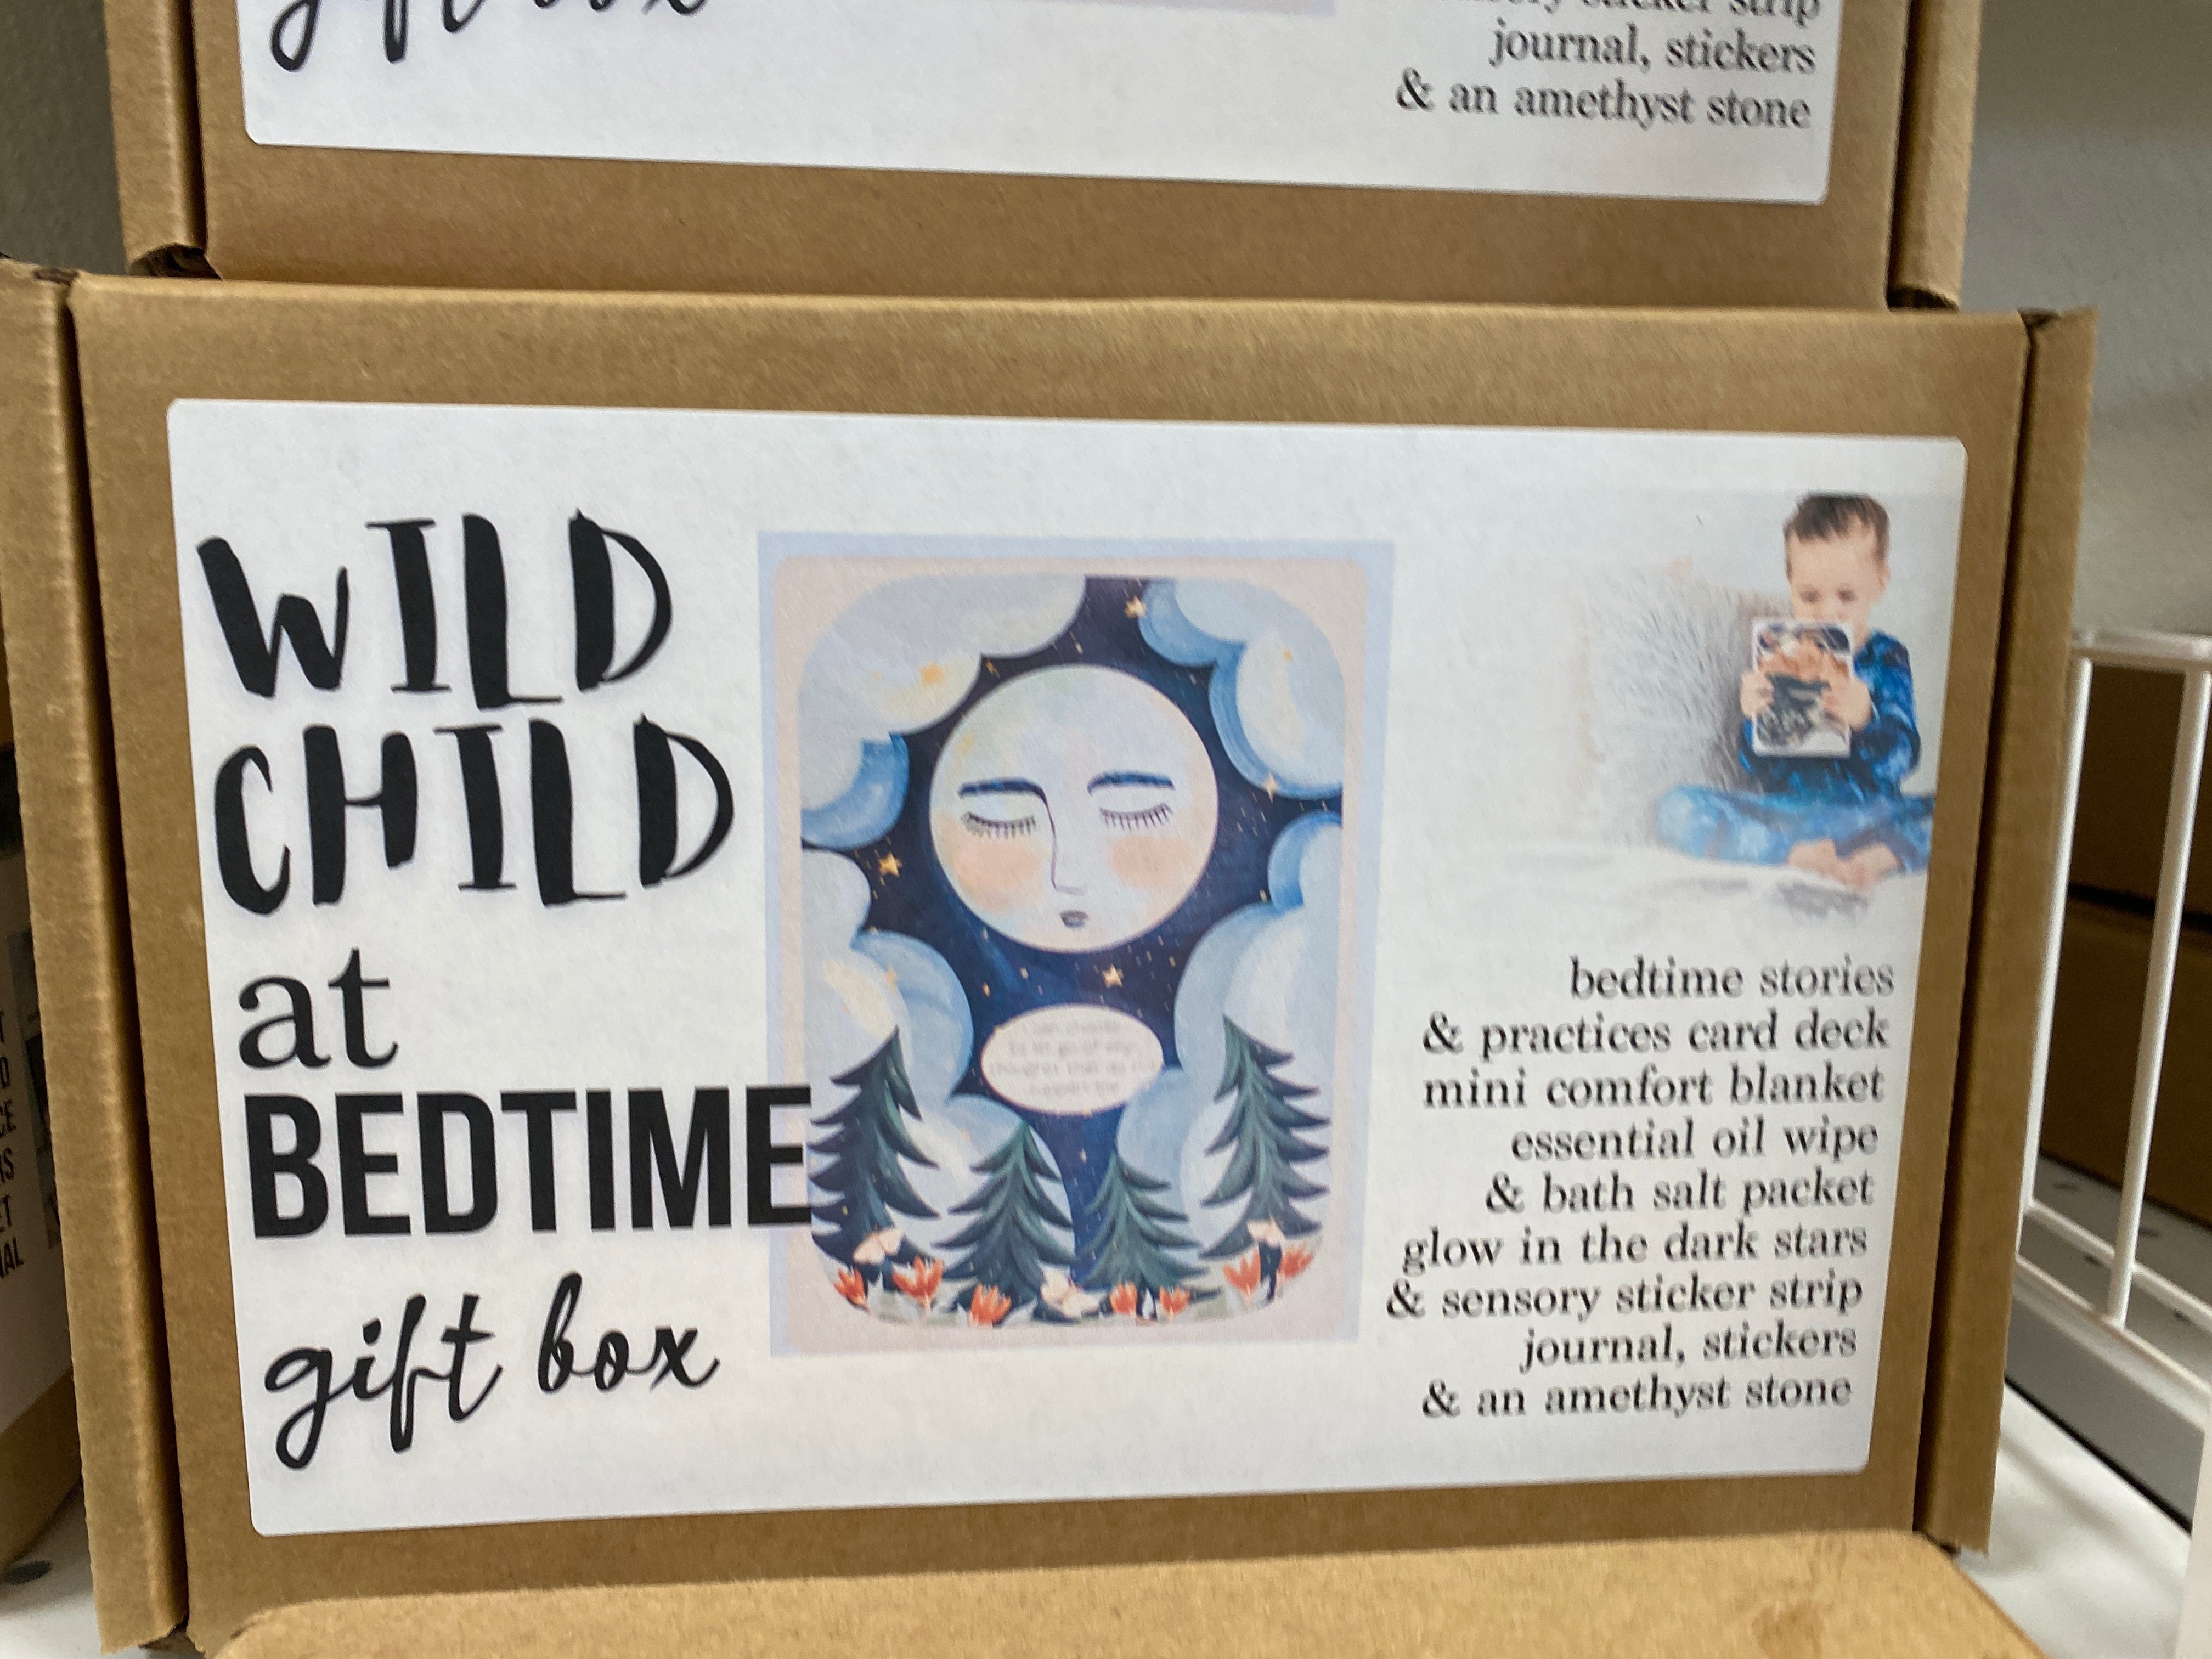 Wild Child at bedtime box